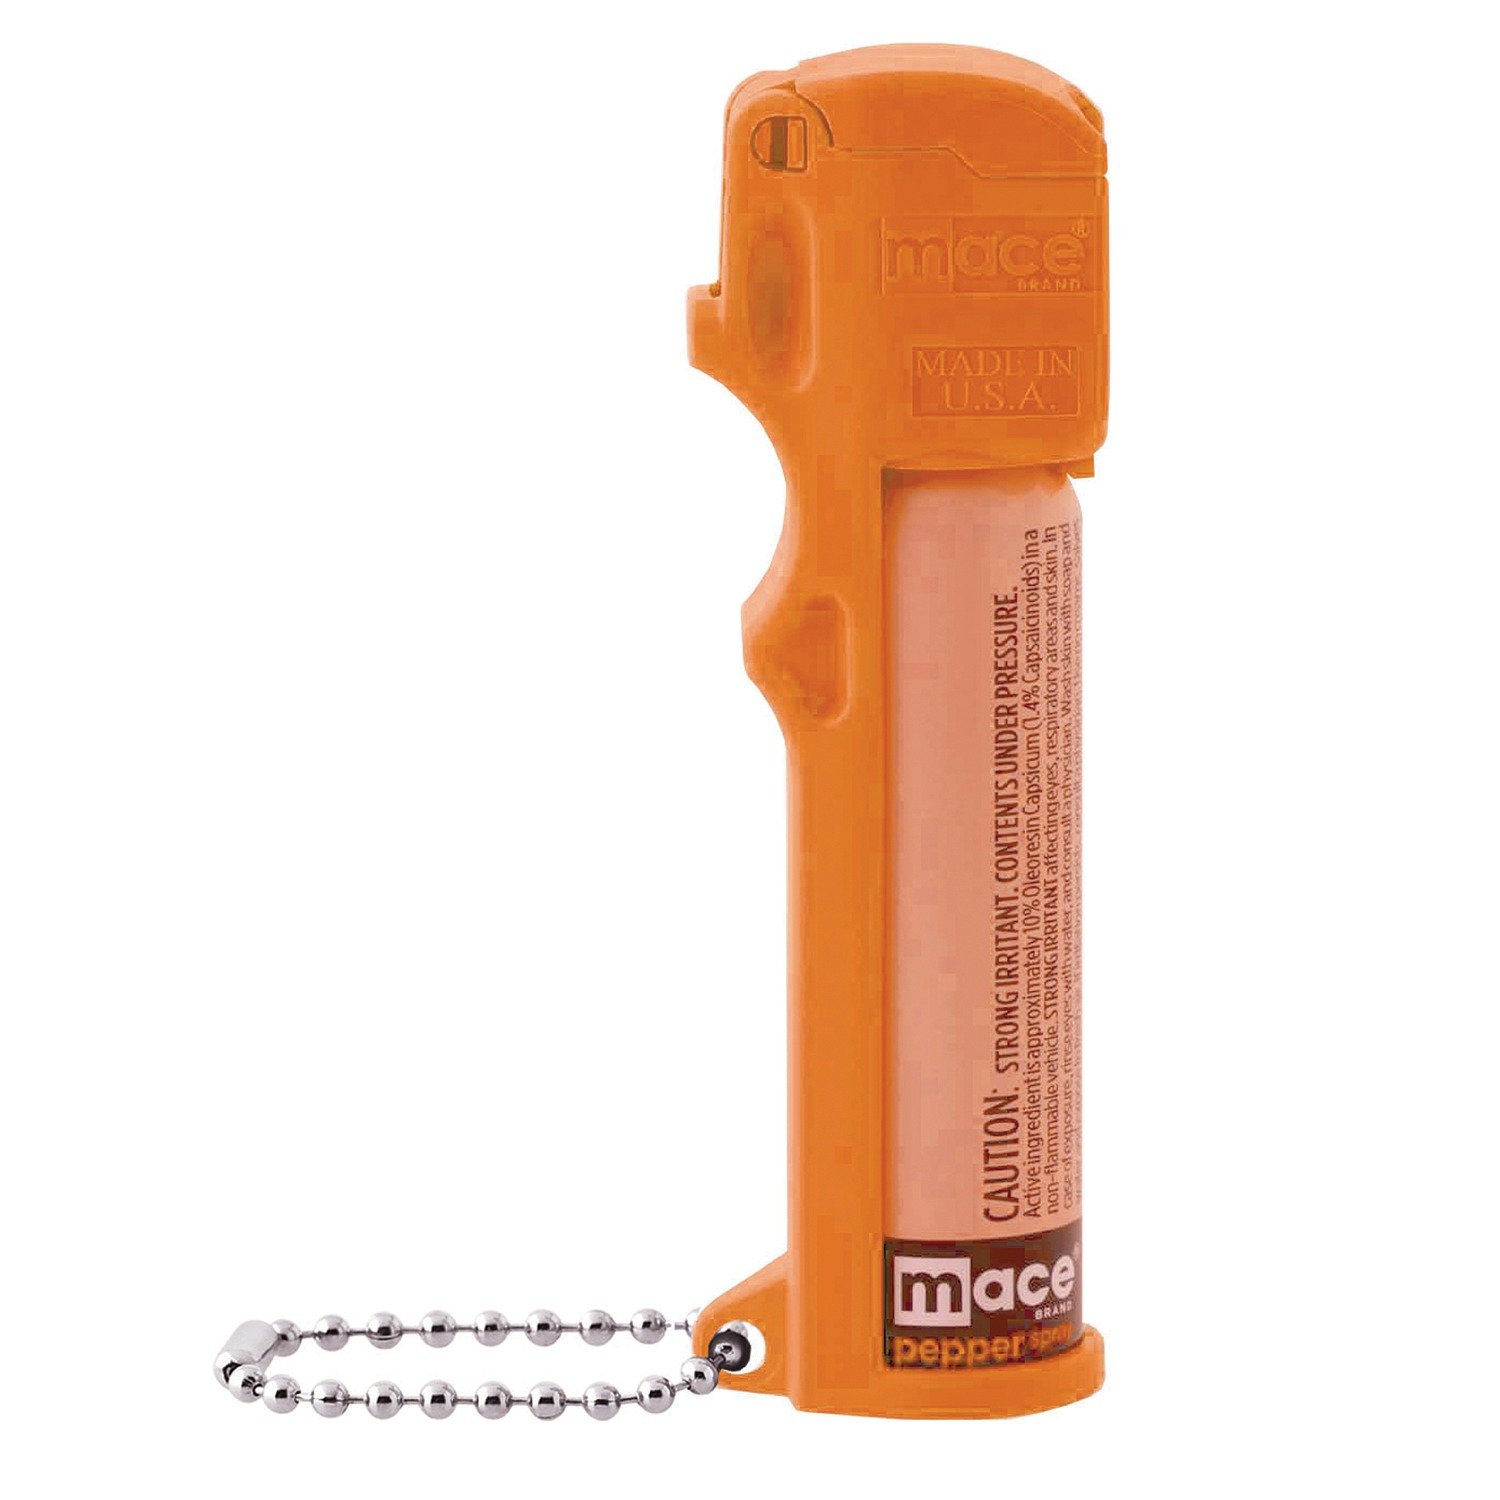 MACE 80729 Personal Pepper Spray (Neon Orange)